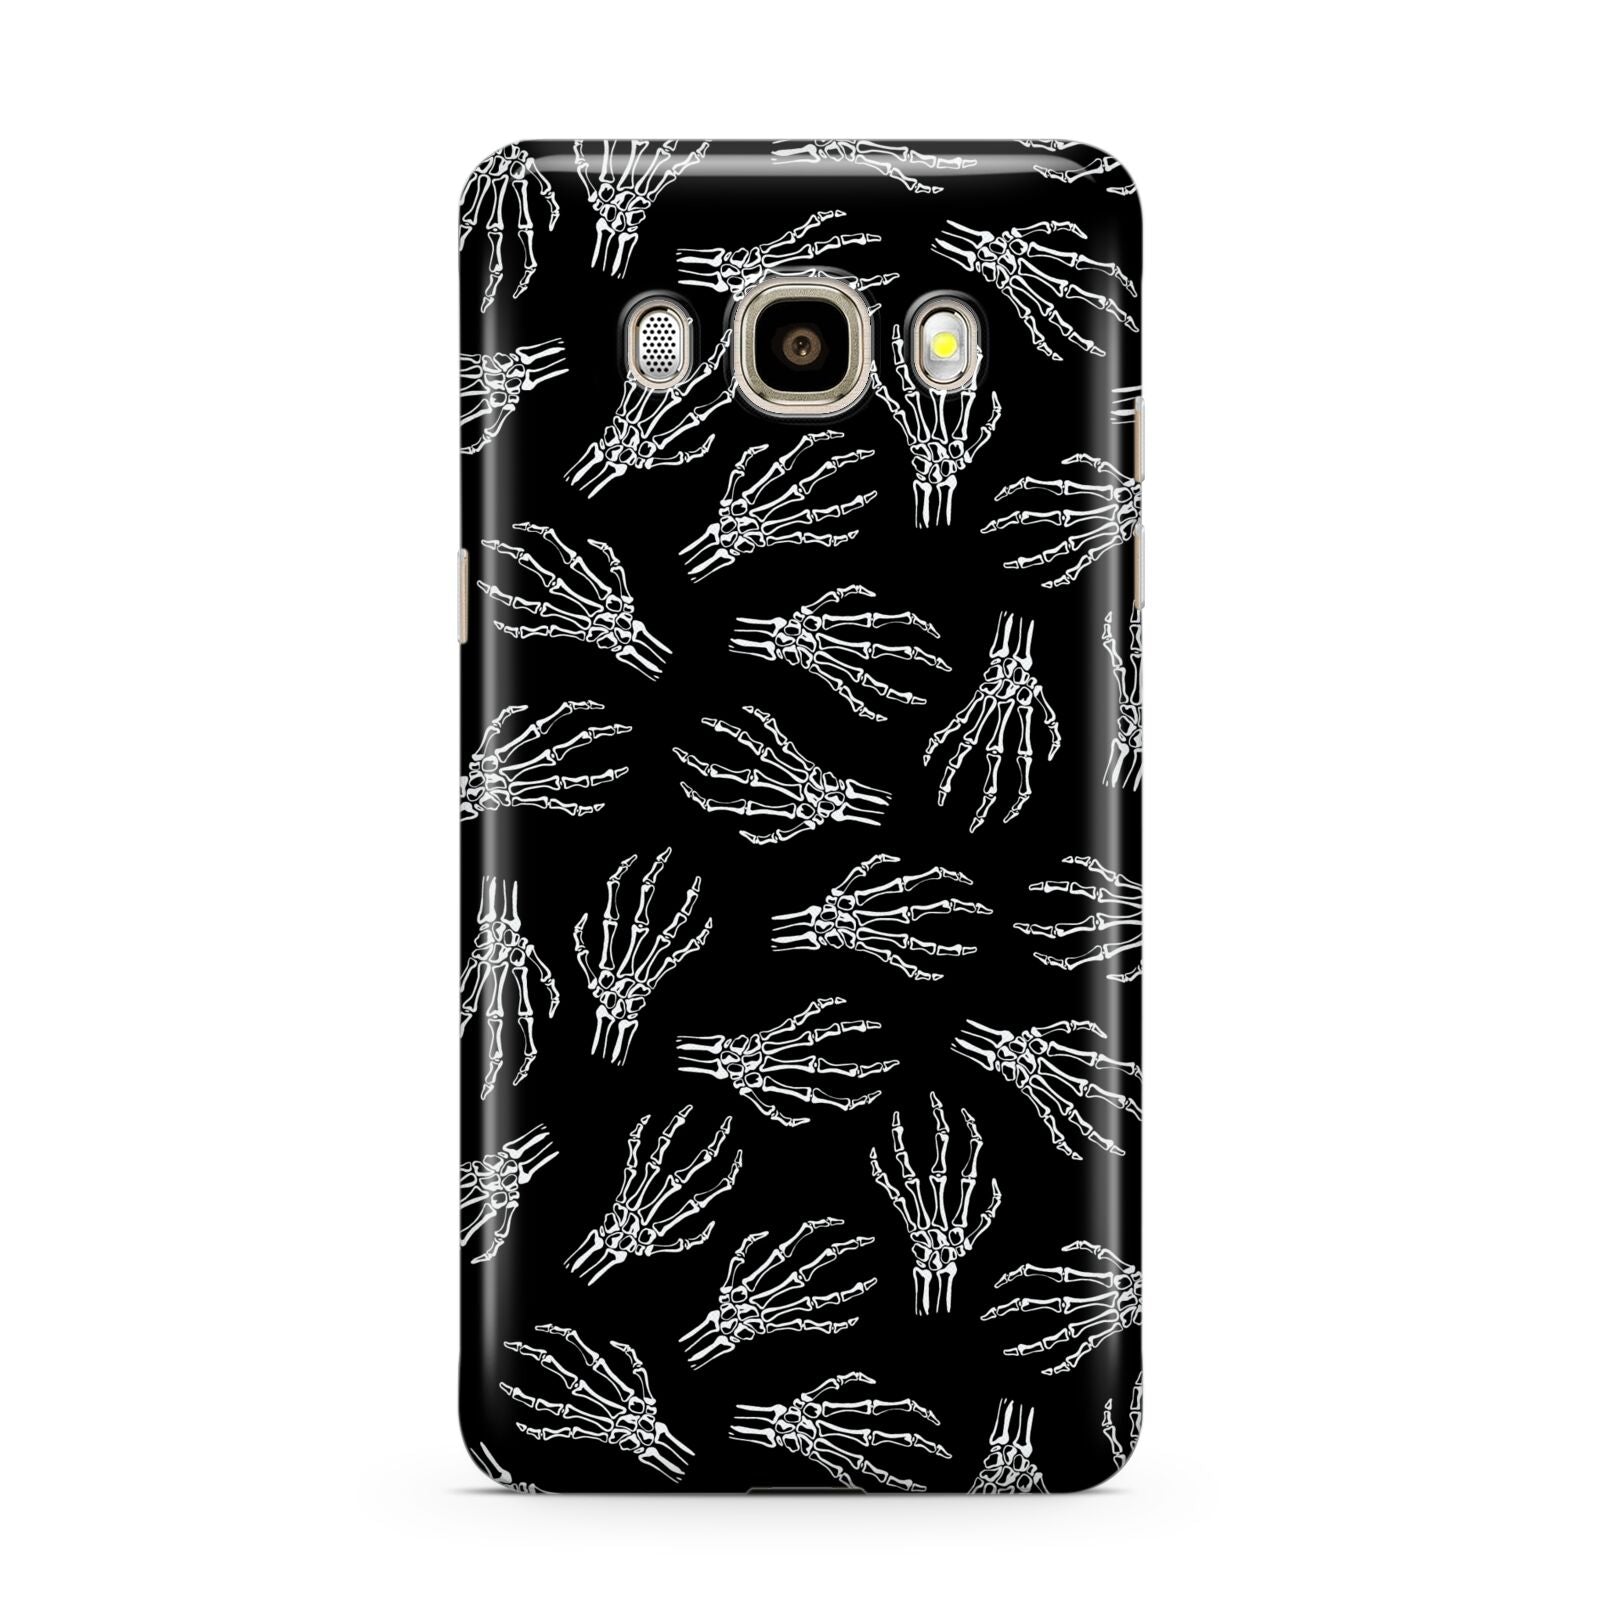 Skeleton Hands Samsung Galaxy J7 2016 Case on gold phone